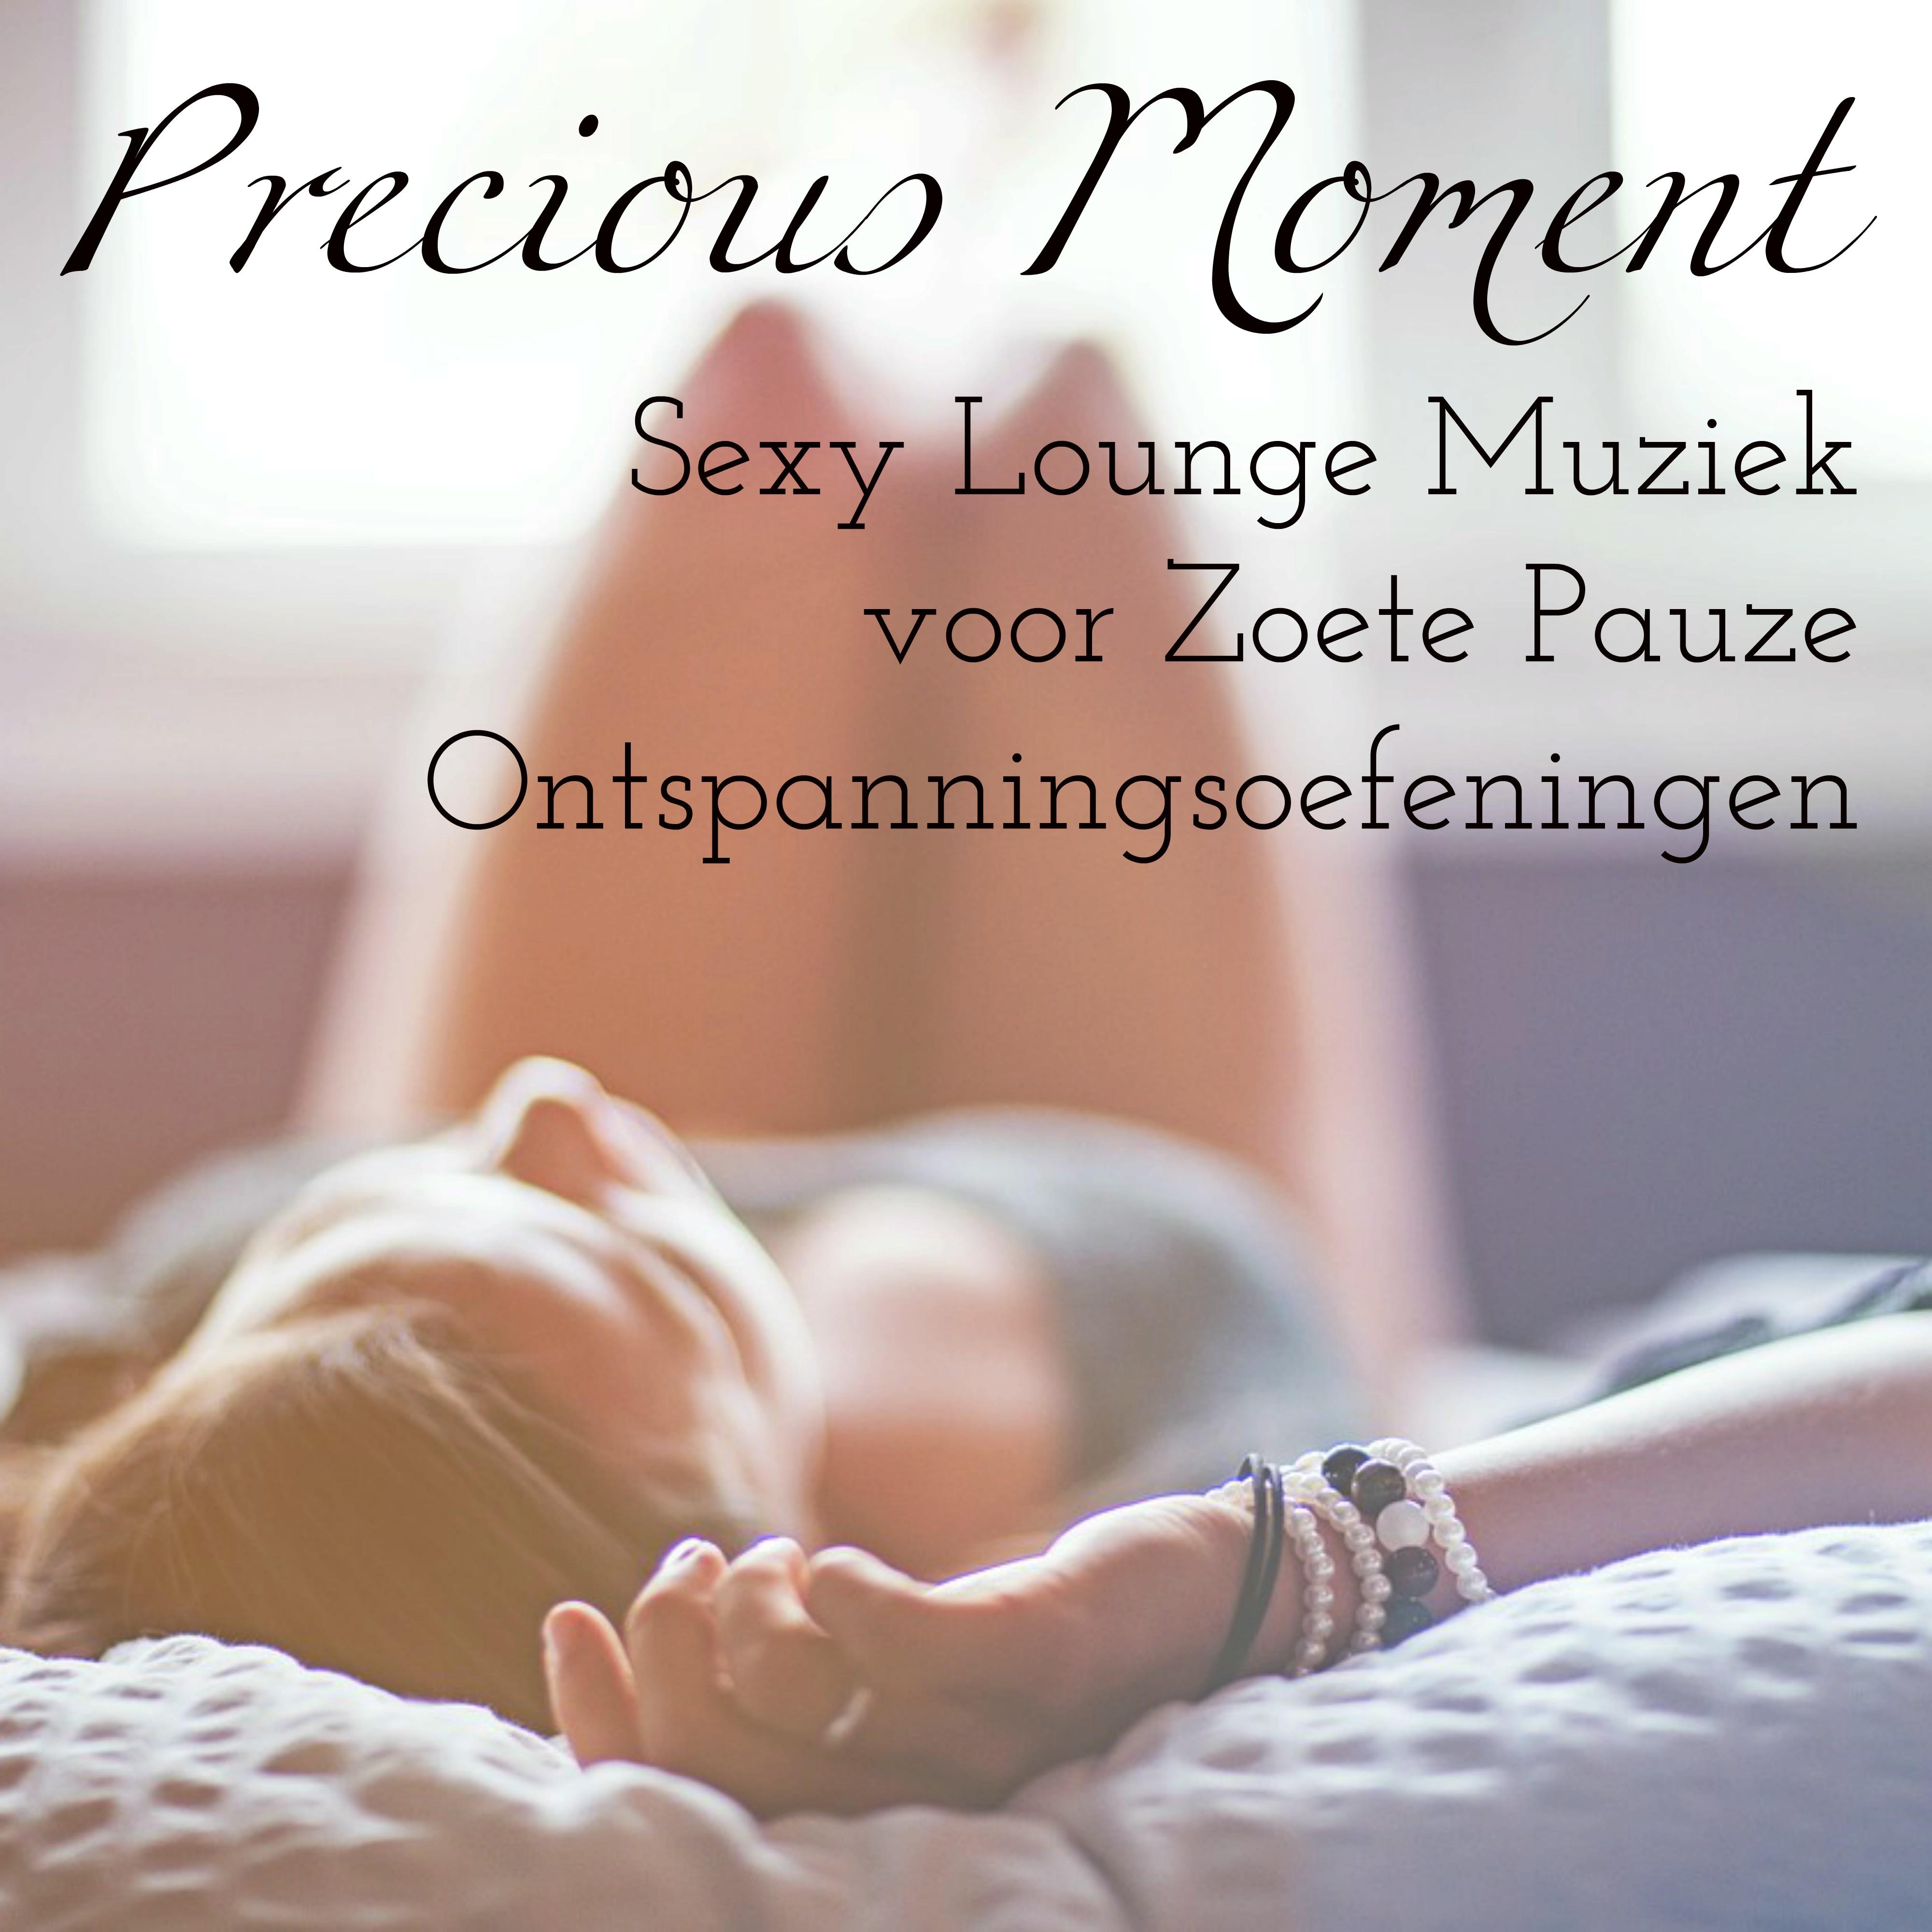 Precious Moment - Sexy Soft Chill Lounge Muziek voor Zoete Pauze Ontspanningsoefeningen